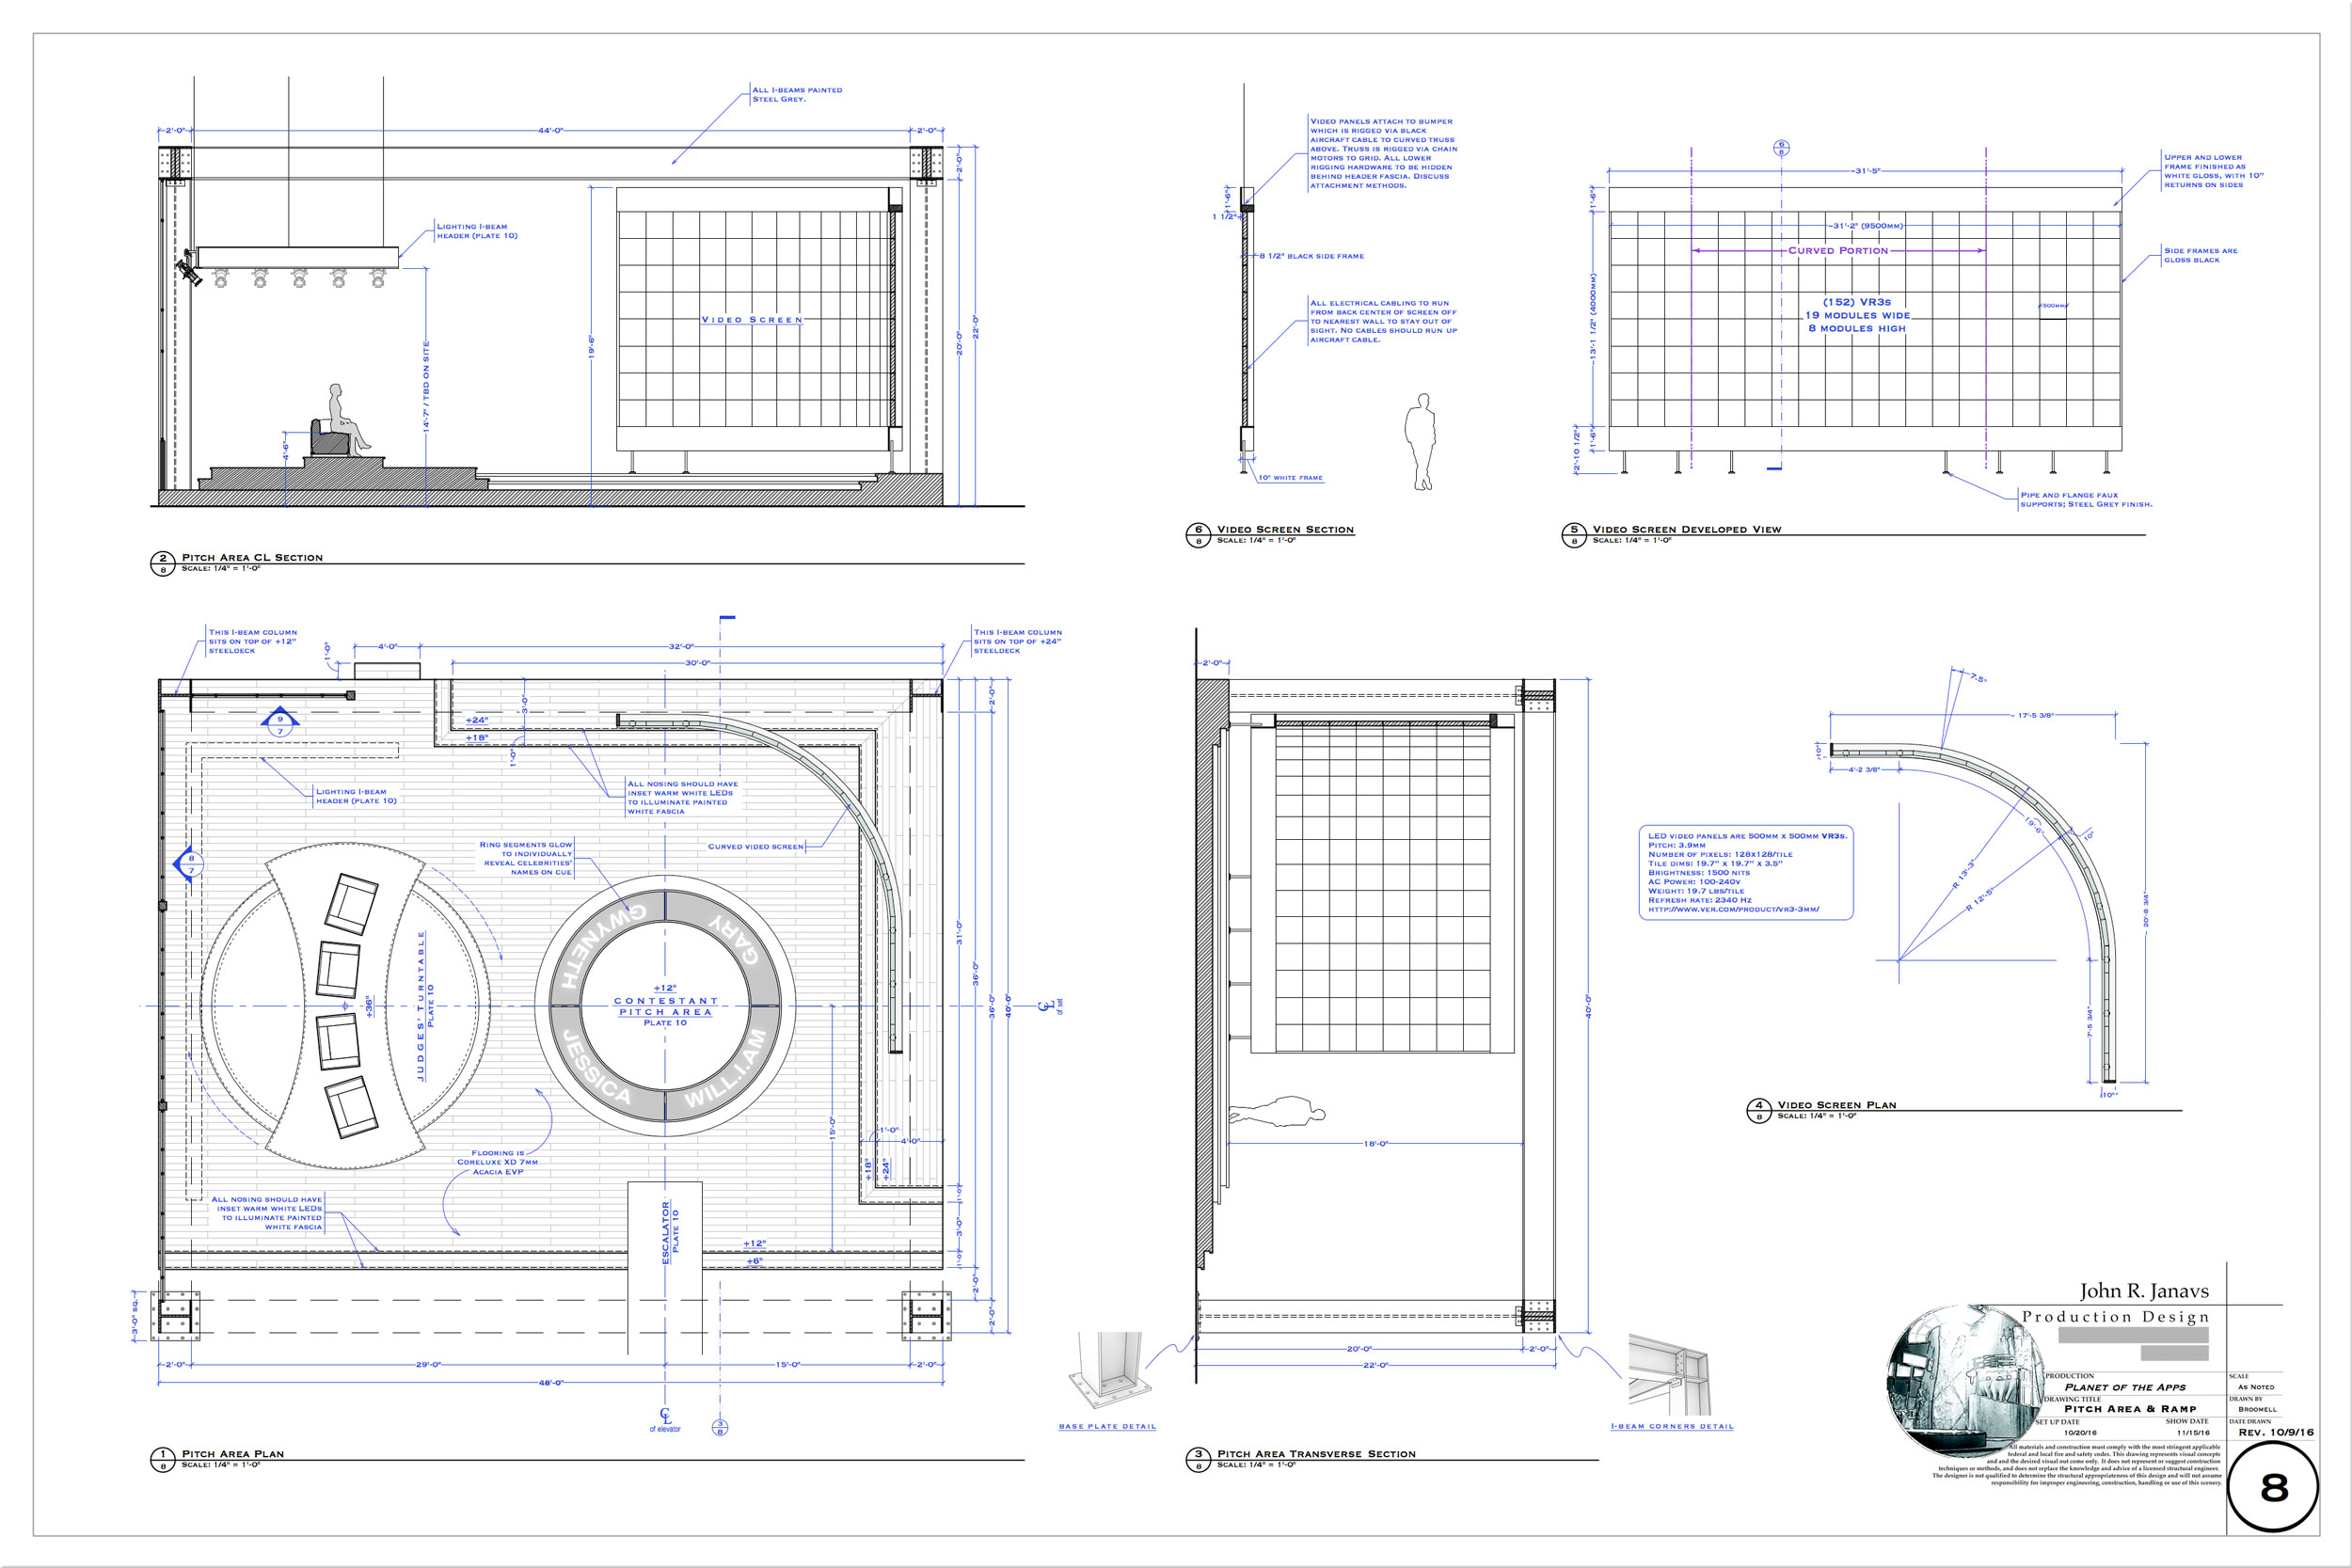 andy-broomell-set-design-drafting-pota3.jpg